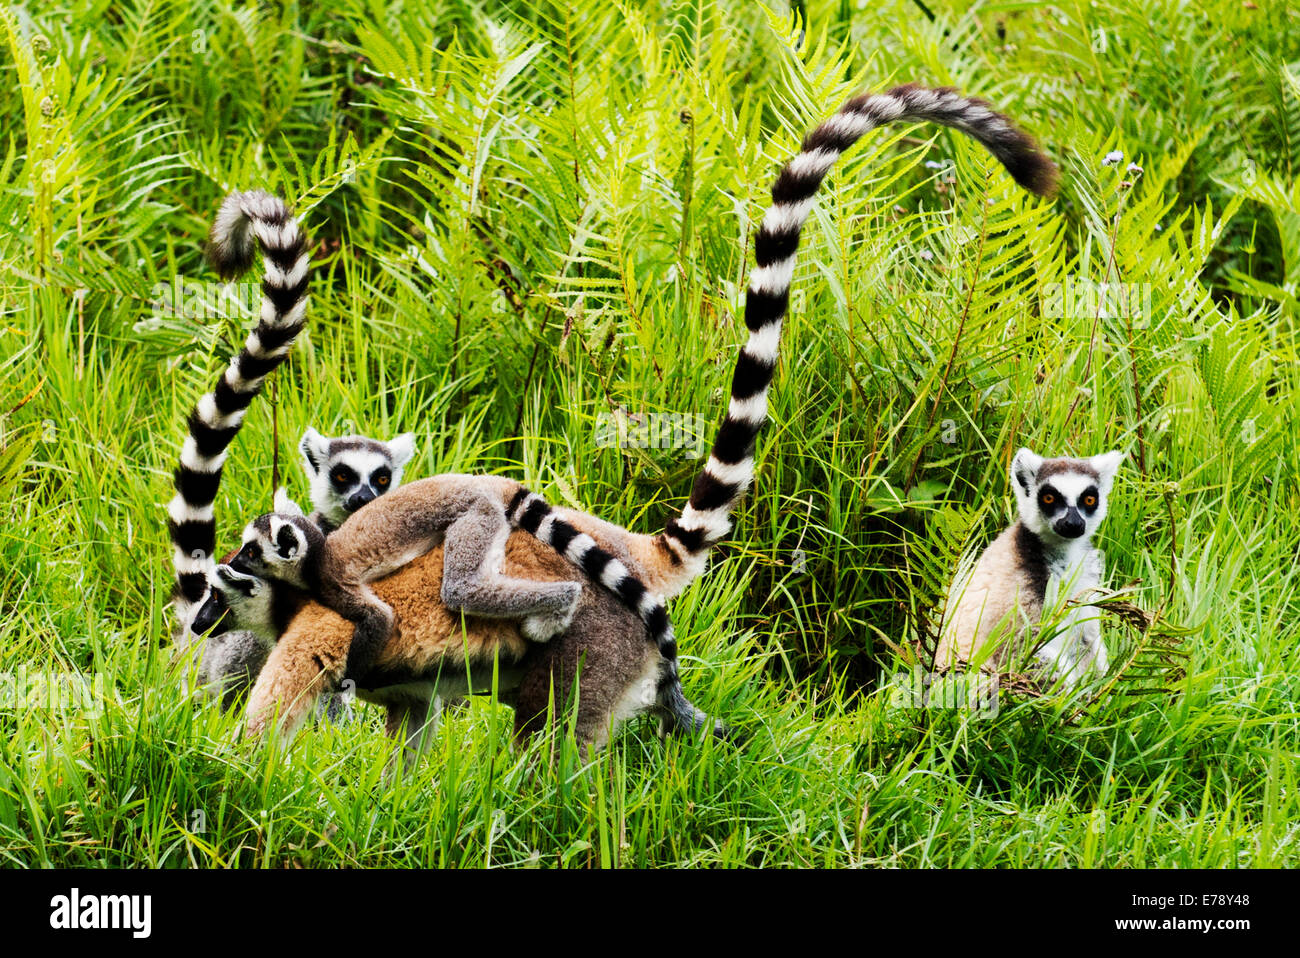 Ring Tailed Lemurs in Madagascar. Stock Photo